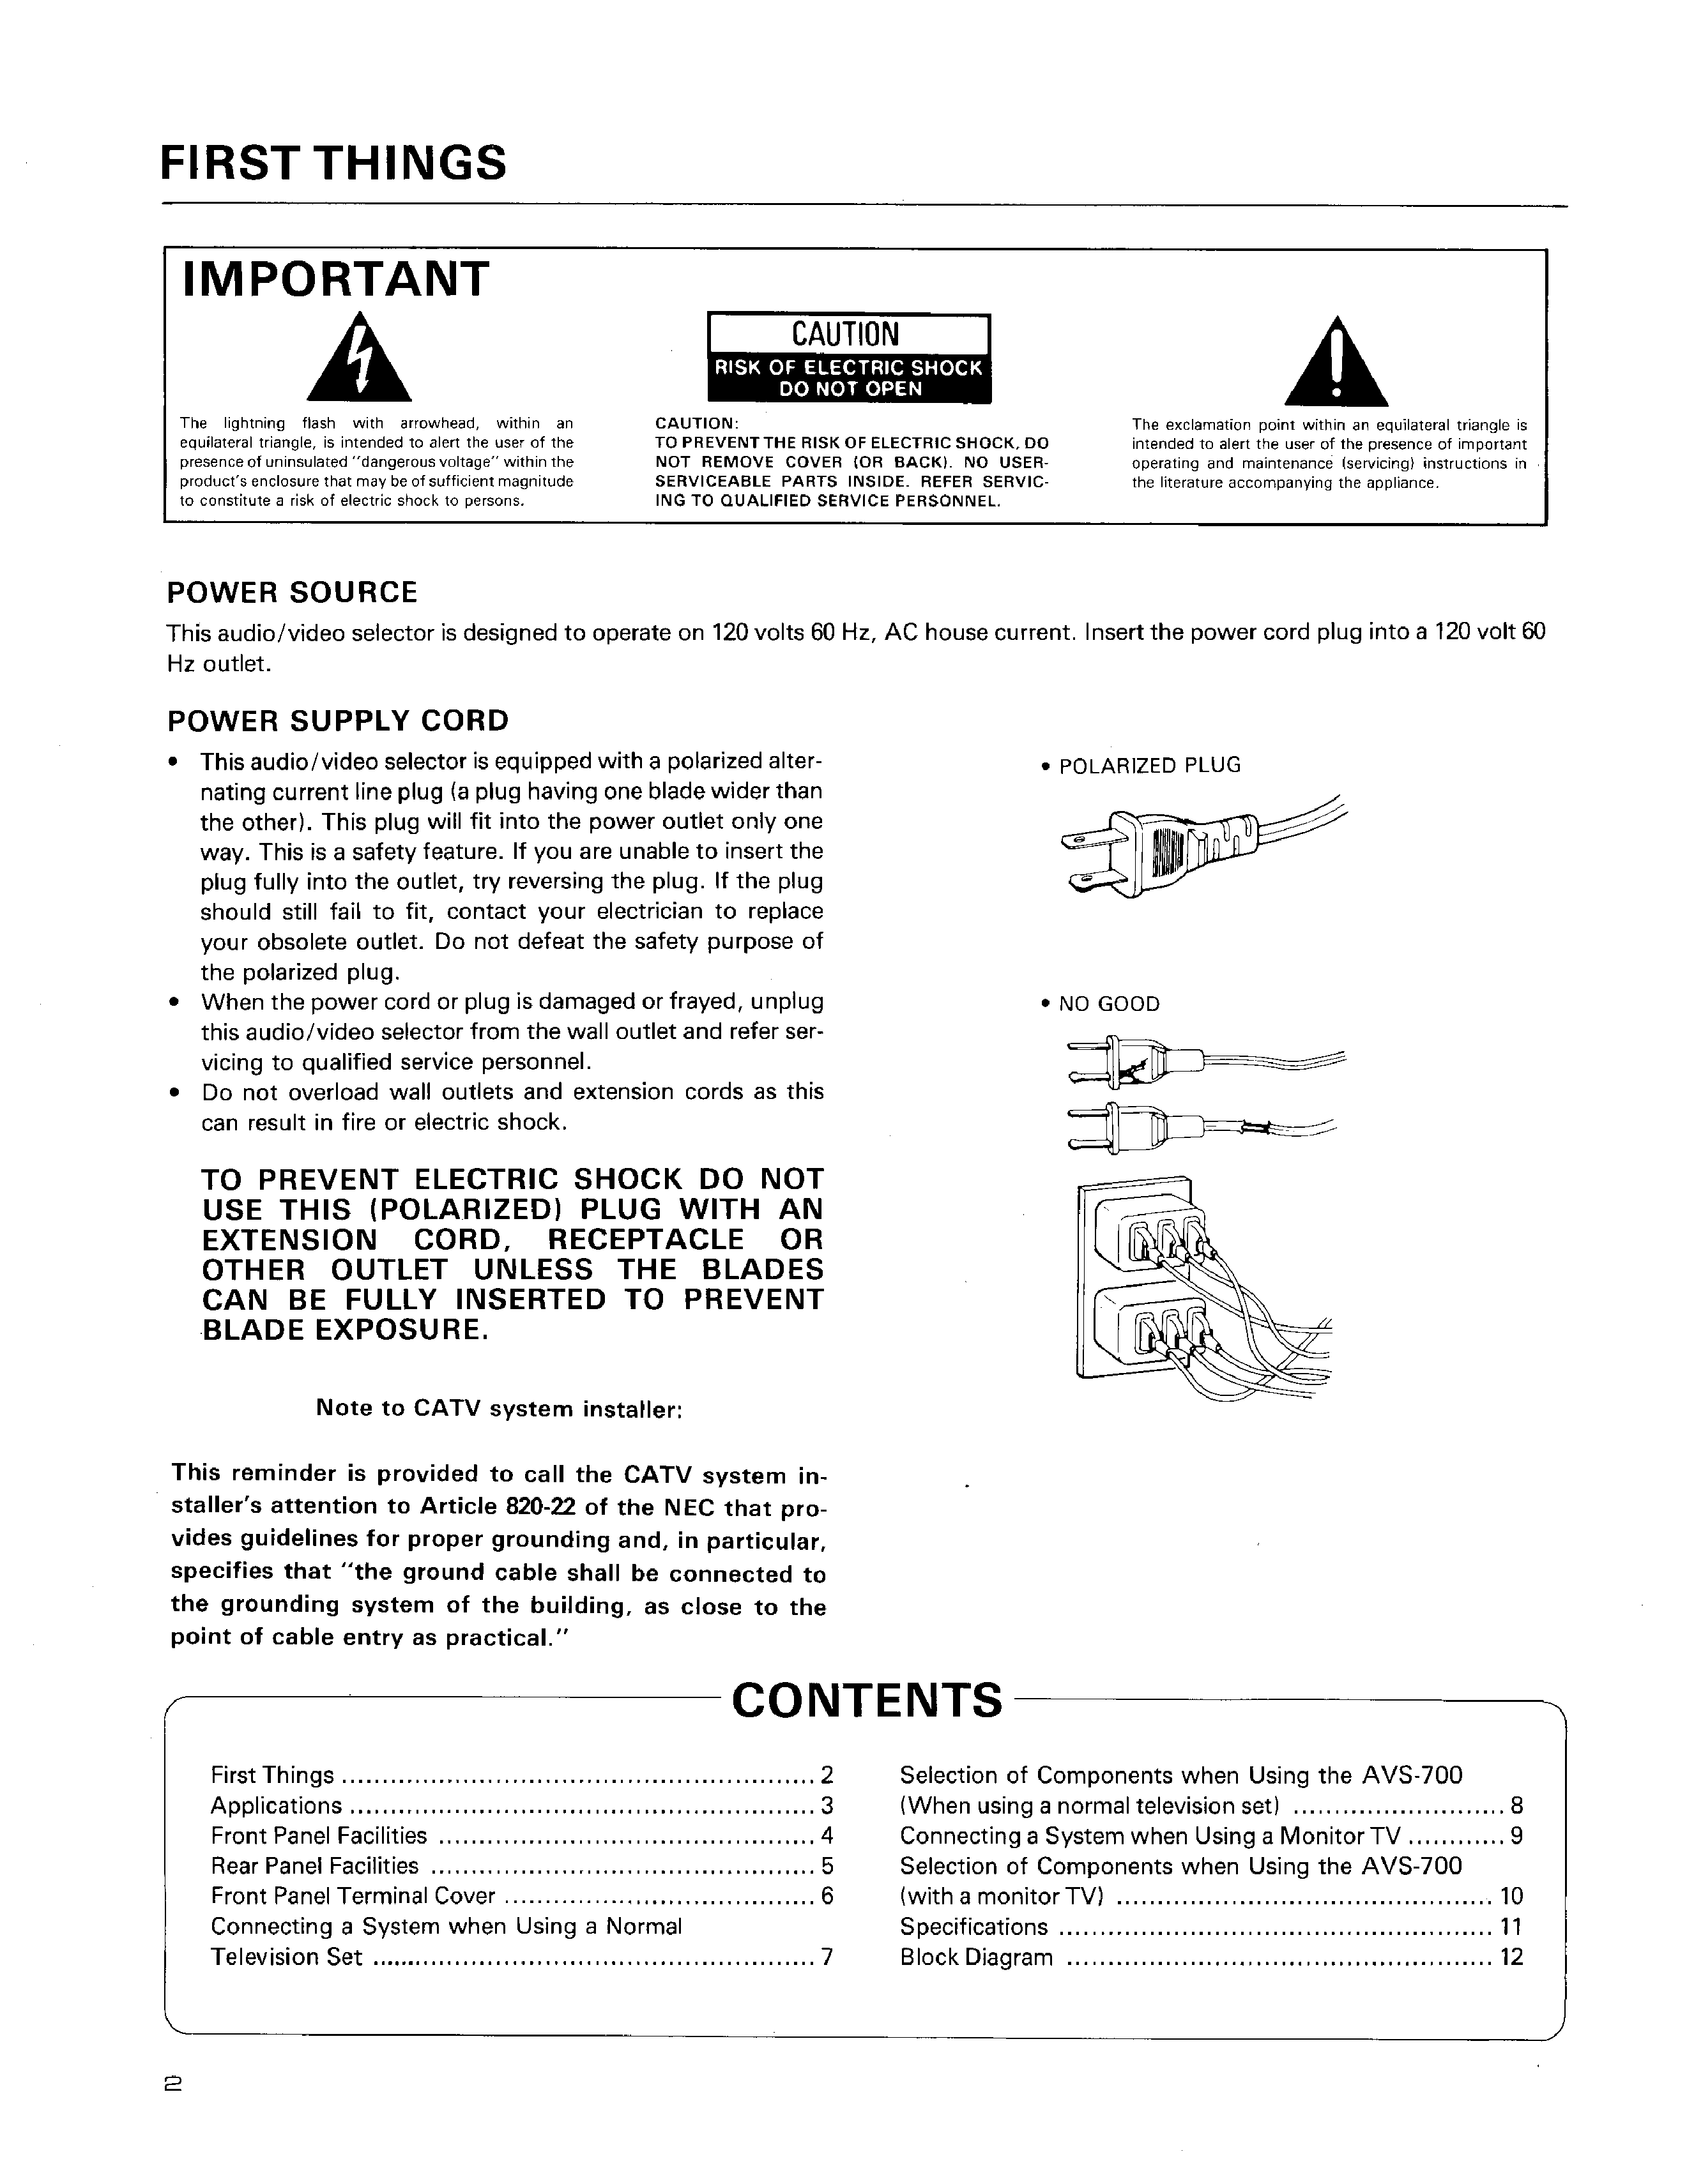 Owner's Manual for PIONEER AVS-700/KU - Download